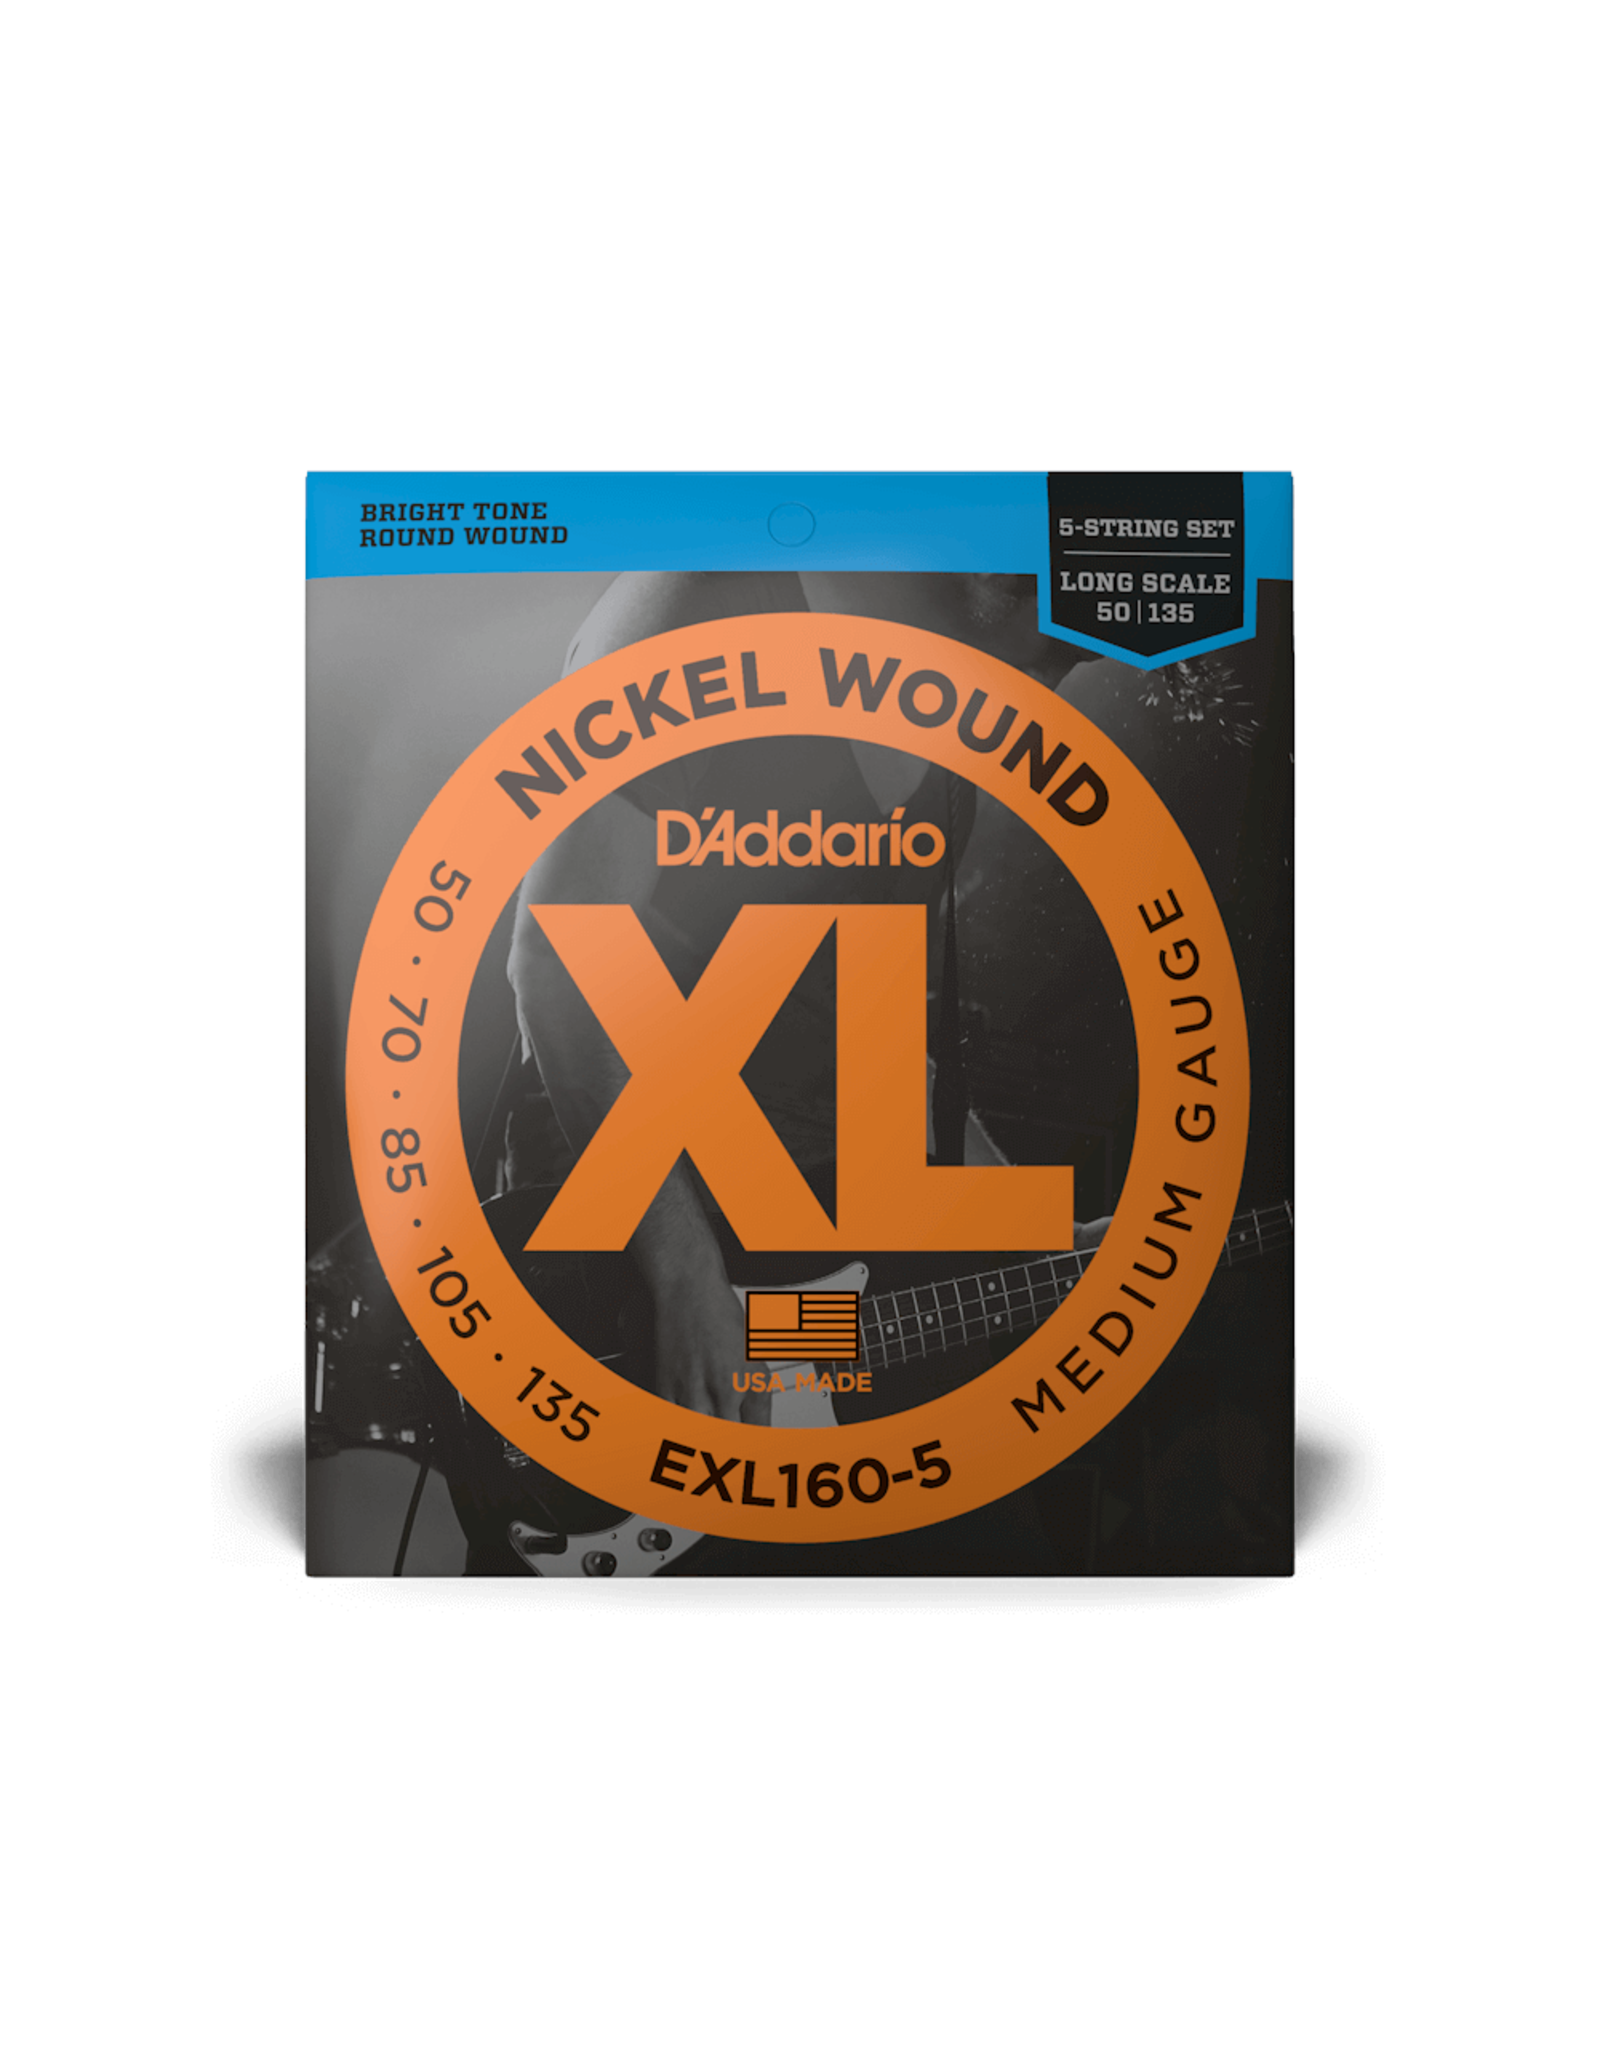 D'Addario D'Addario EXL160-5 Nickel Wound 5-String Bass, Medium, 50-135, Long Scale